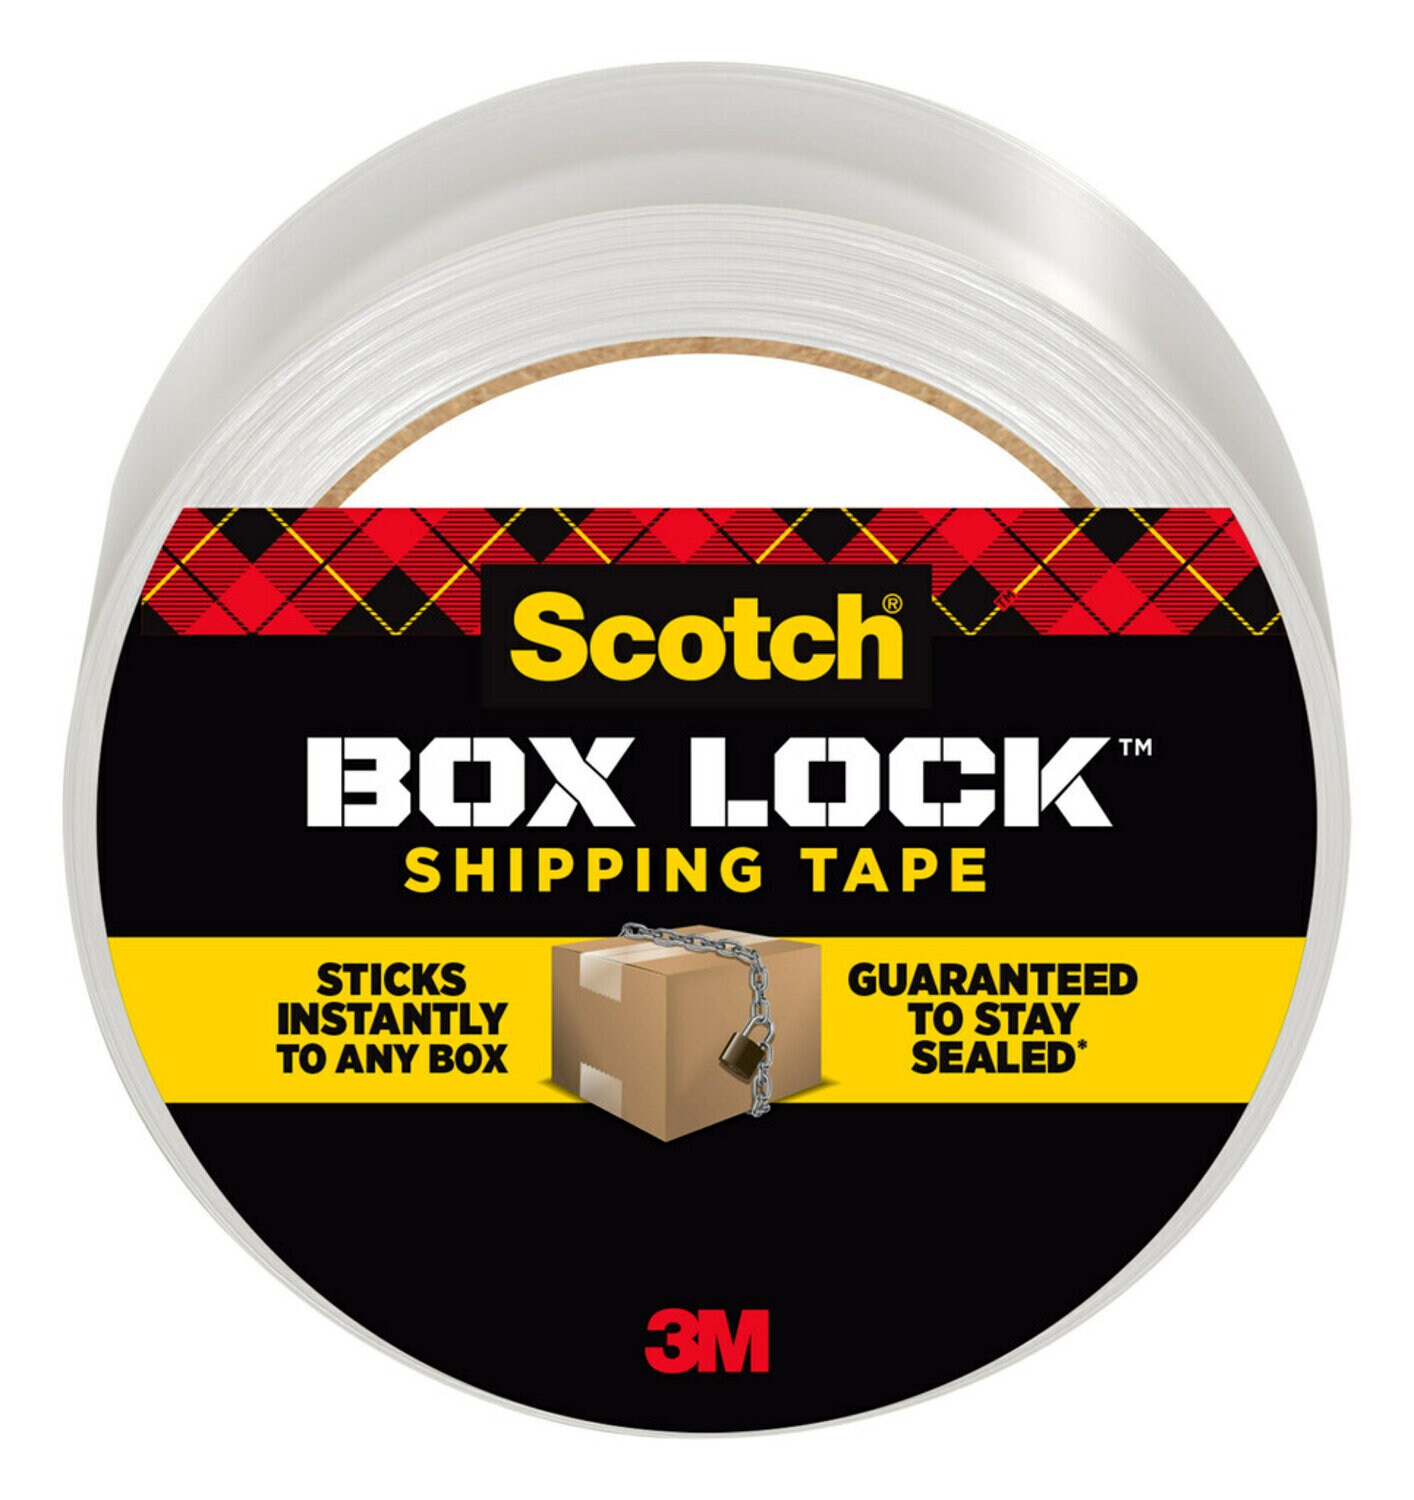 3M - 185 - Scotch Masking Tape 185, 3/4 in x 1000 in Roll - RS